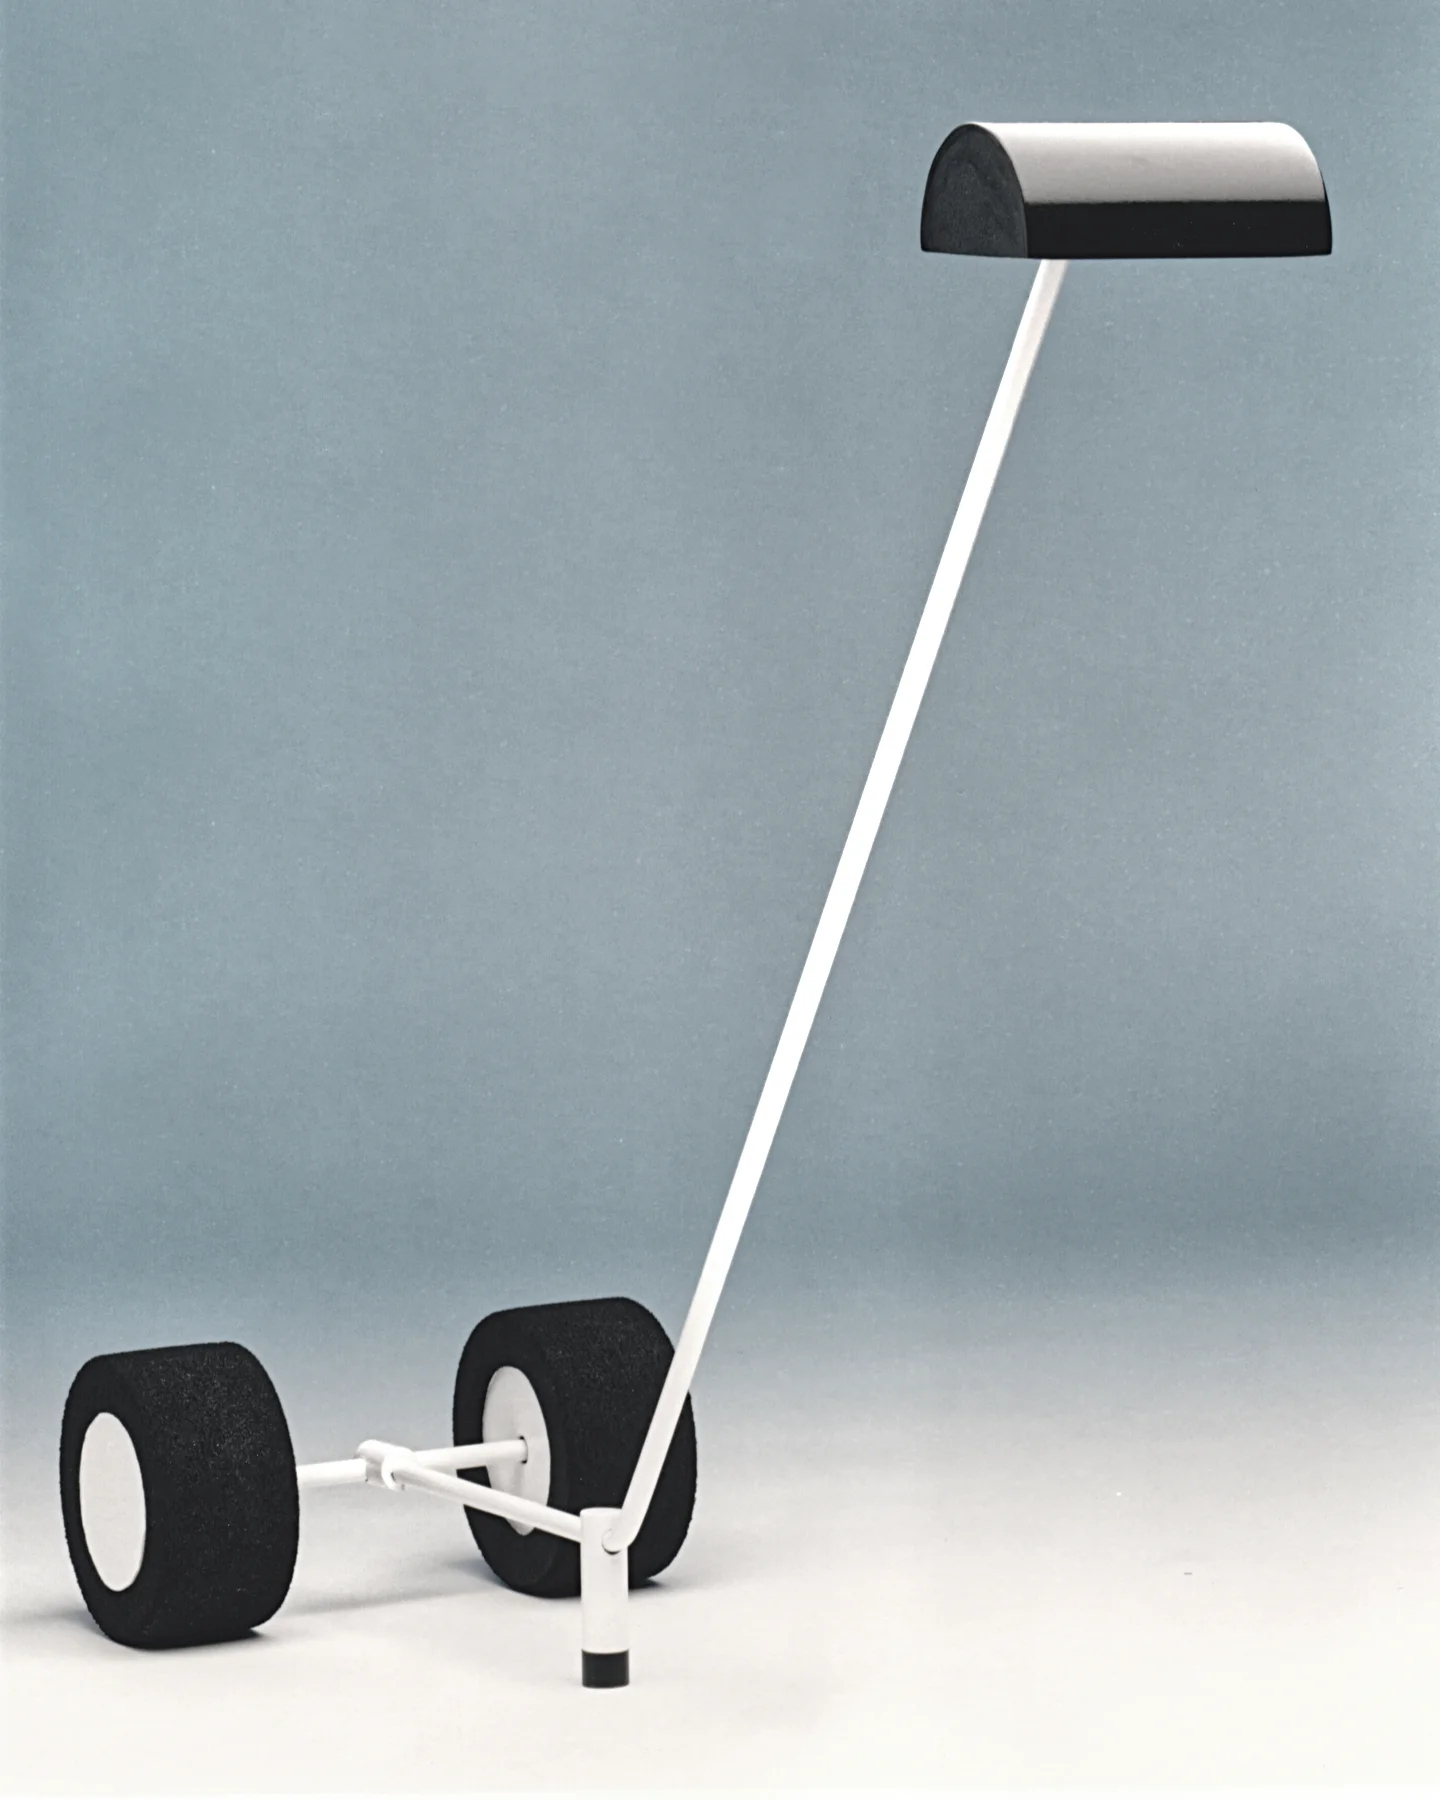 Caddy desk lamp - Martin Kania Design